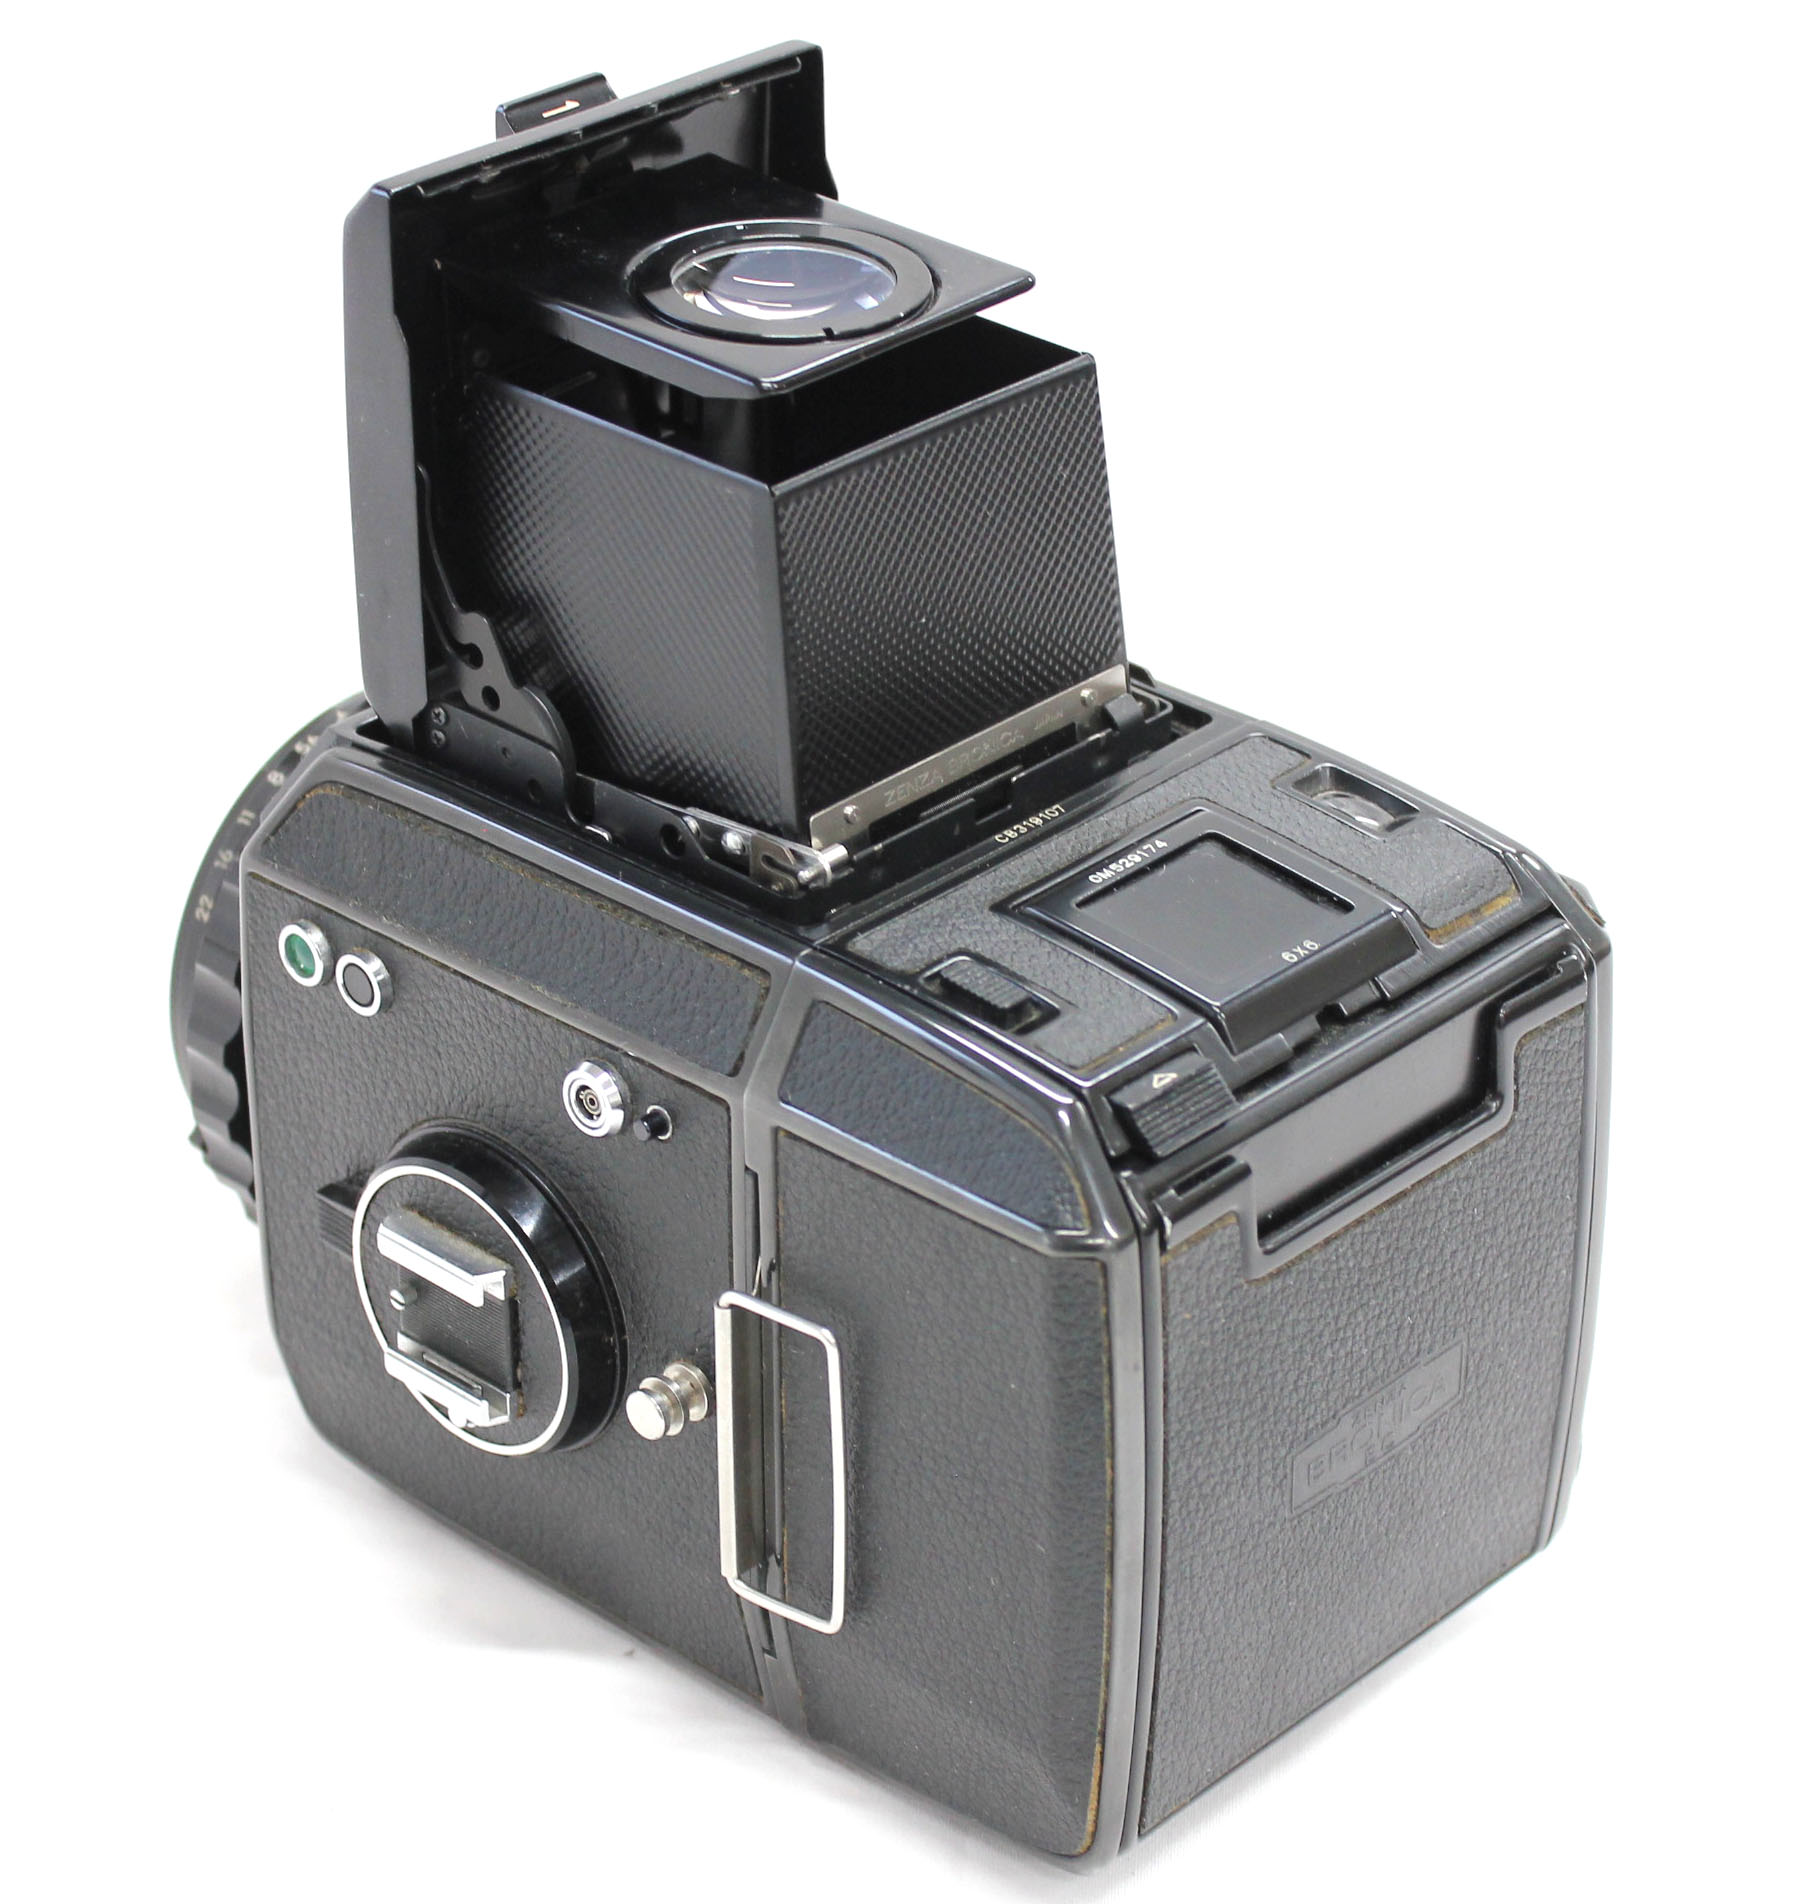  Zenza Bronica EC 6x6 Medium Format Camera w/ Nikkor-P.C 75mm F/2.8 Lens from Japan Photo 3